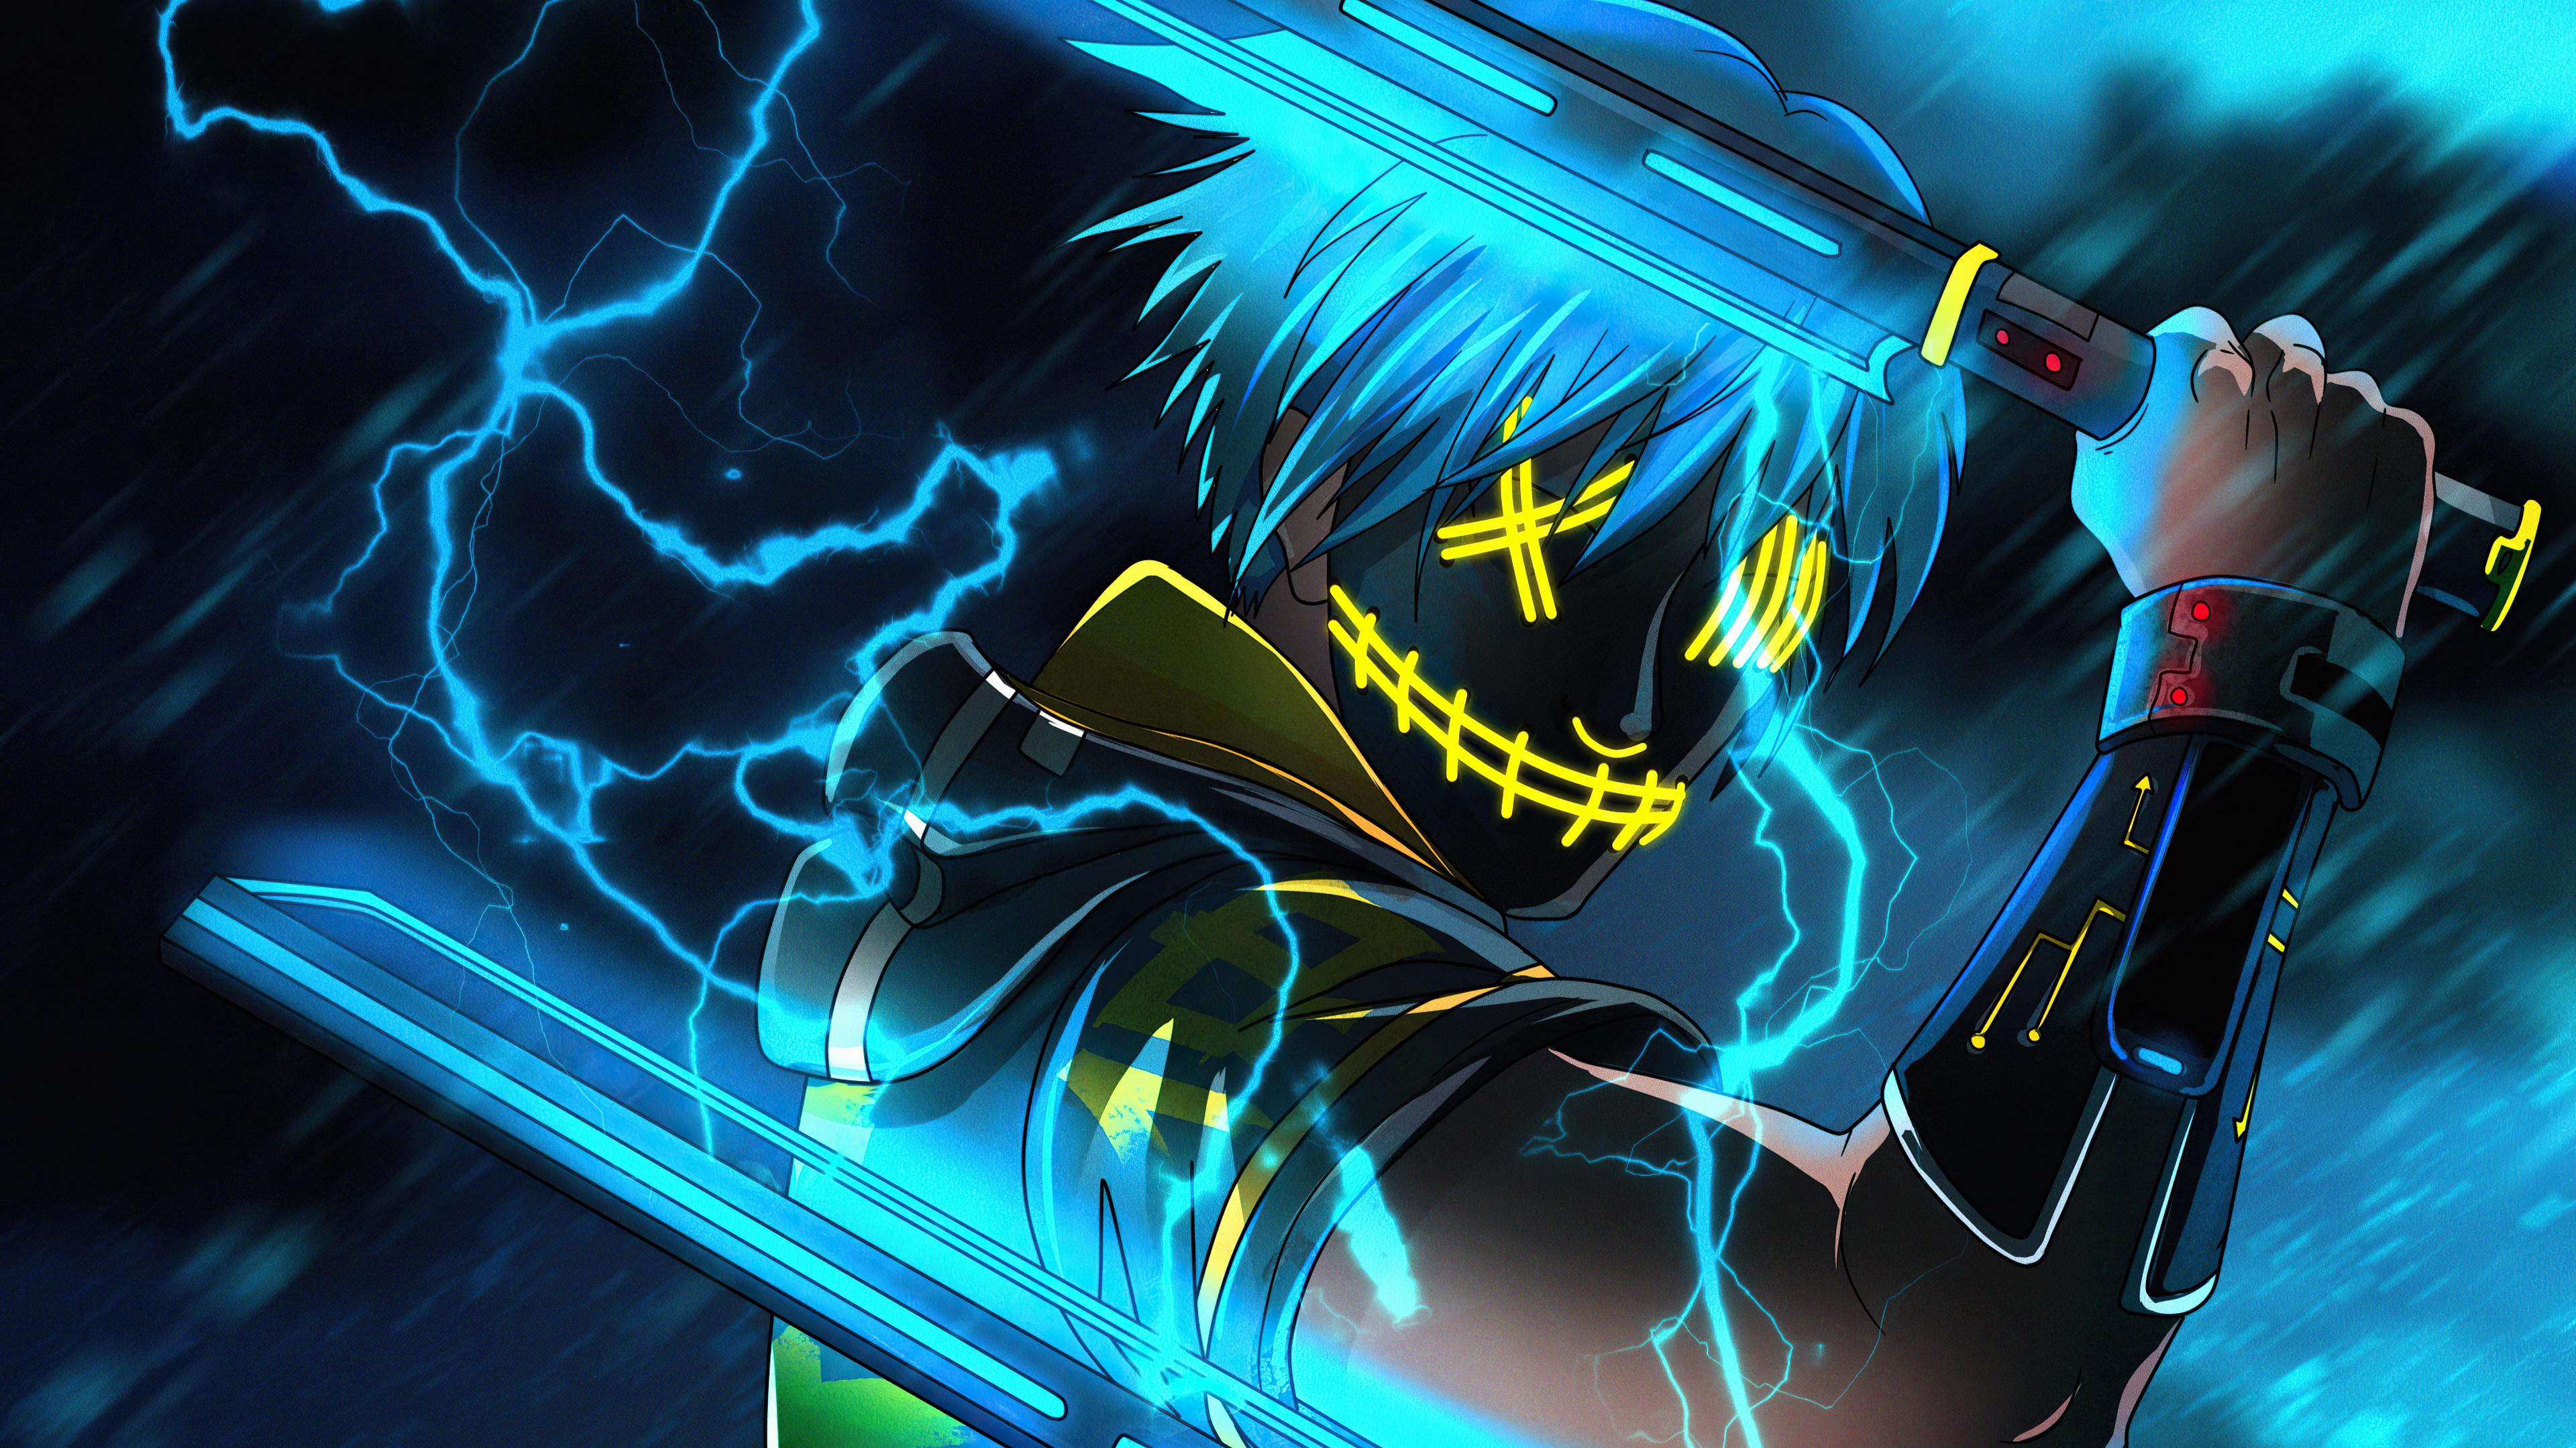 Anime Ninja 4k HD Wallpaper Image Background